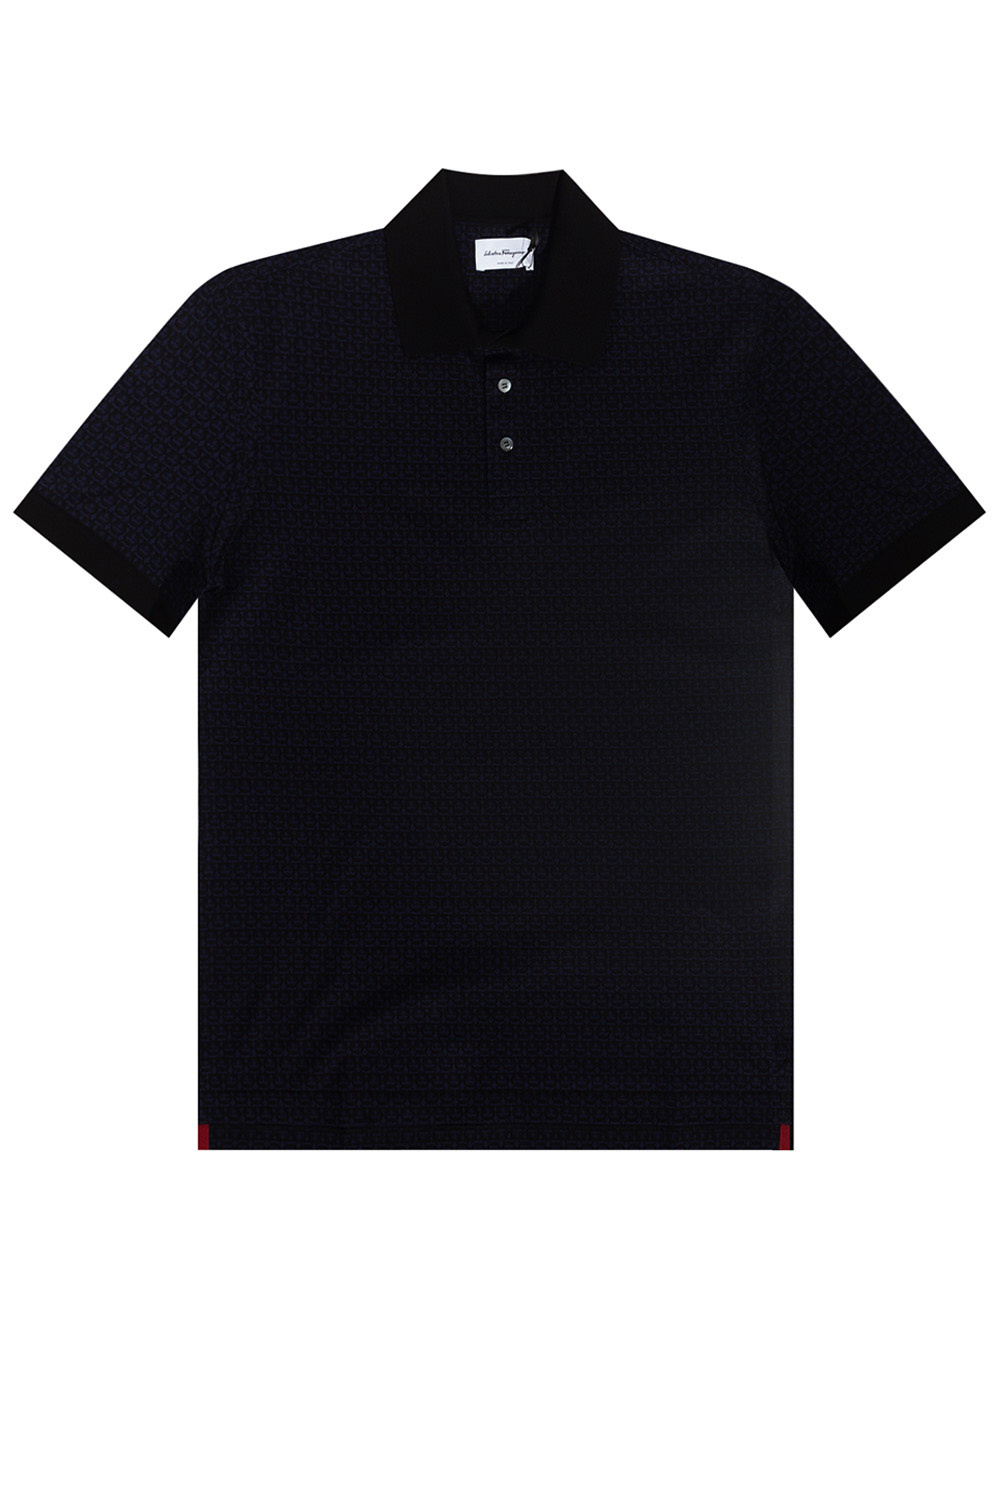 IetpShops | FERRAGAMO Polo shirt with logo | Men's Clothing